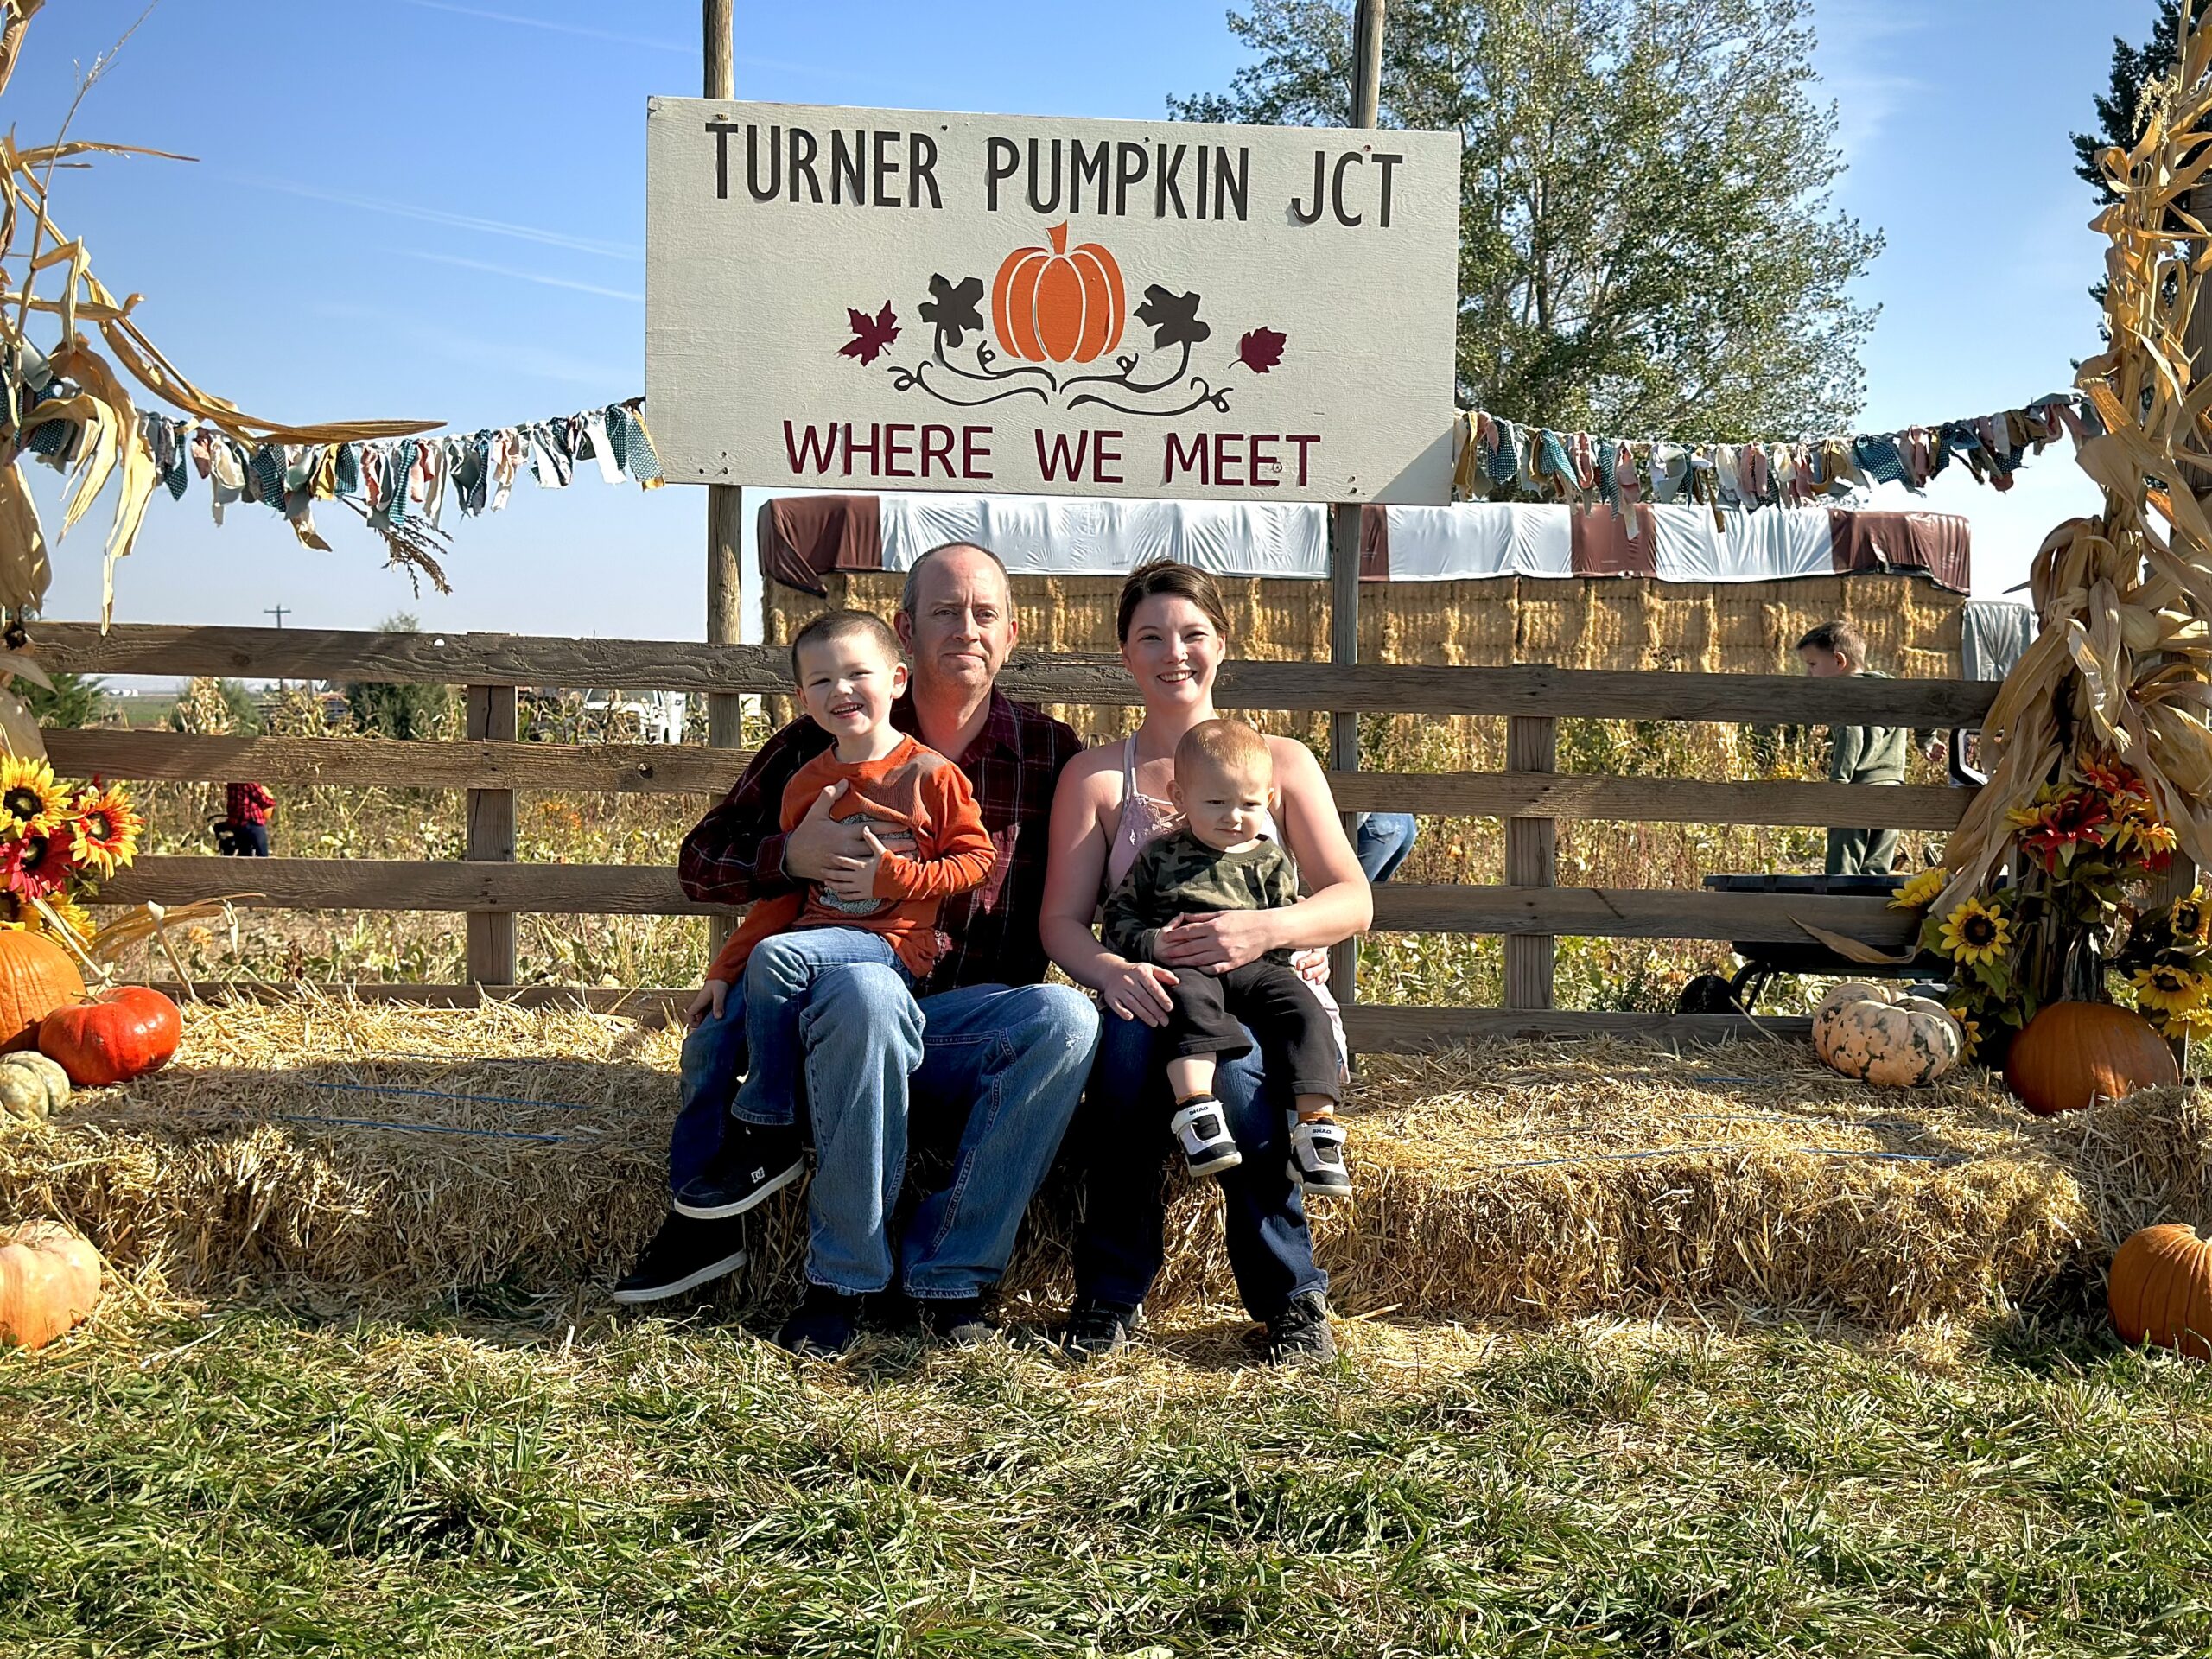 Turner pumpkin junction -053